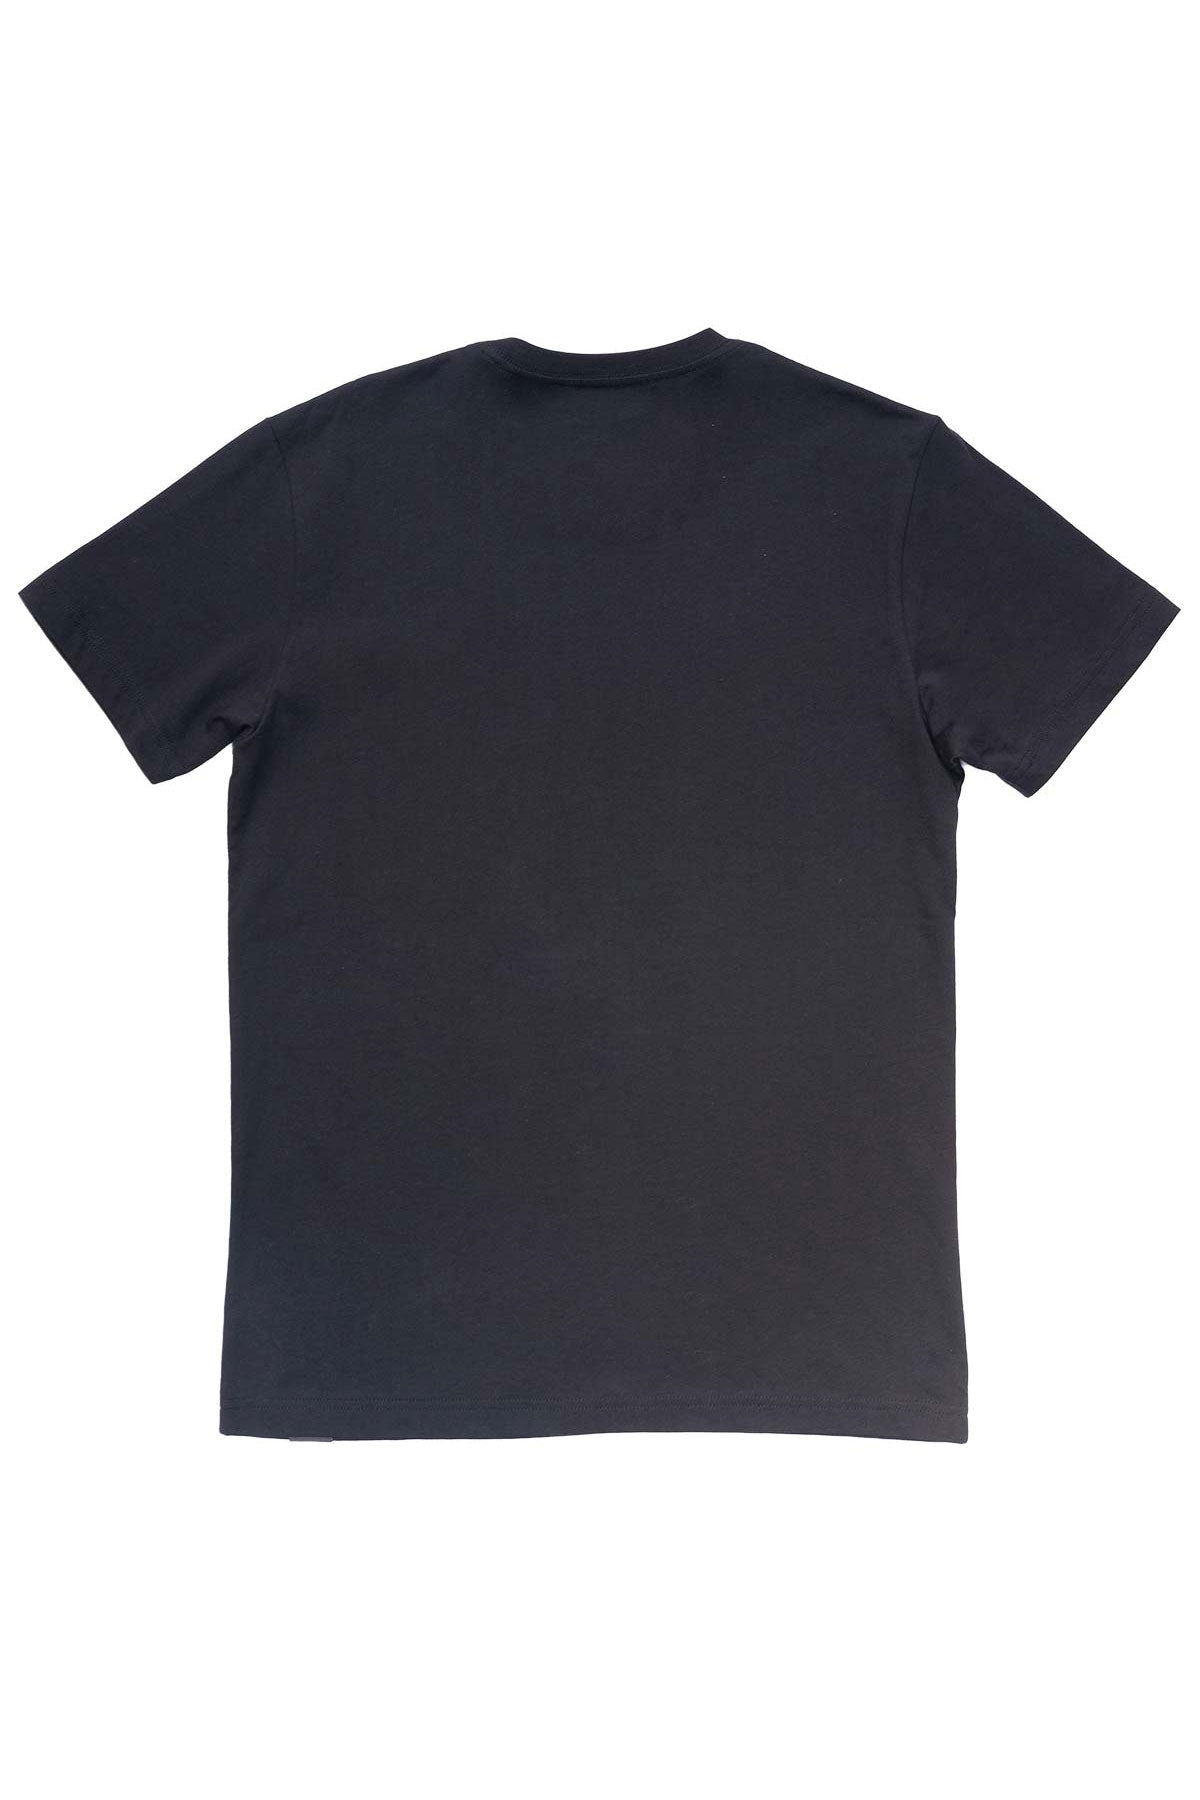 Izo Basic Short Sleeve Crew Neck T-Shirt - Black - Stafu Pro Series